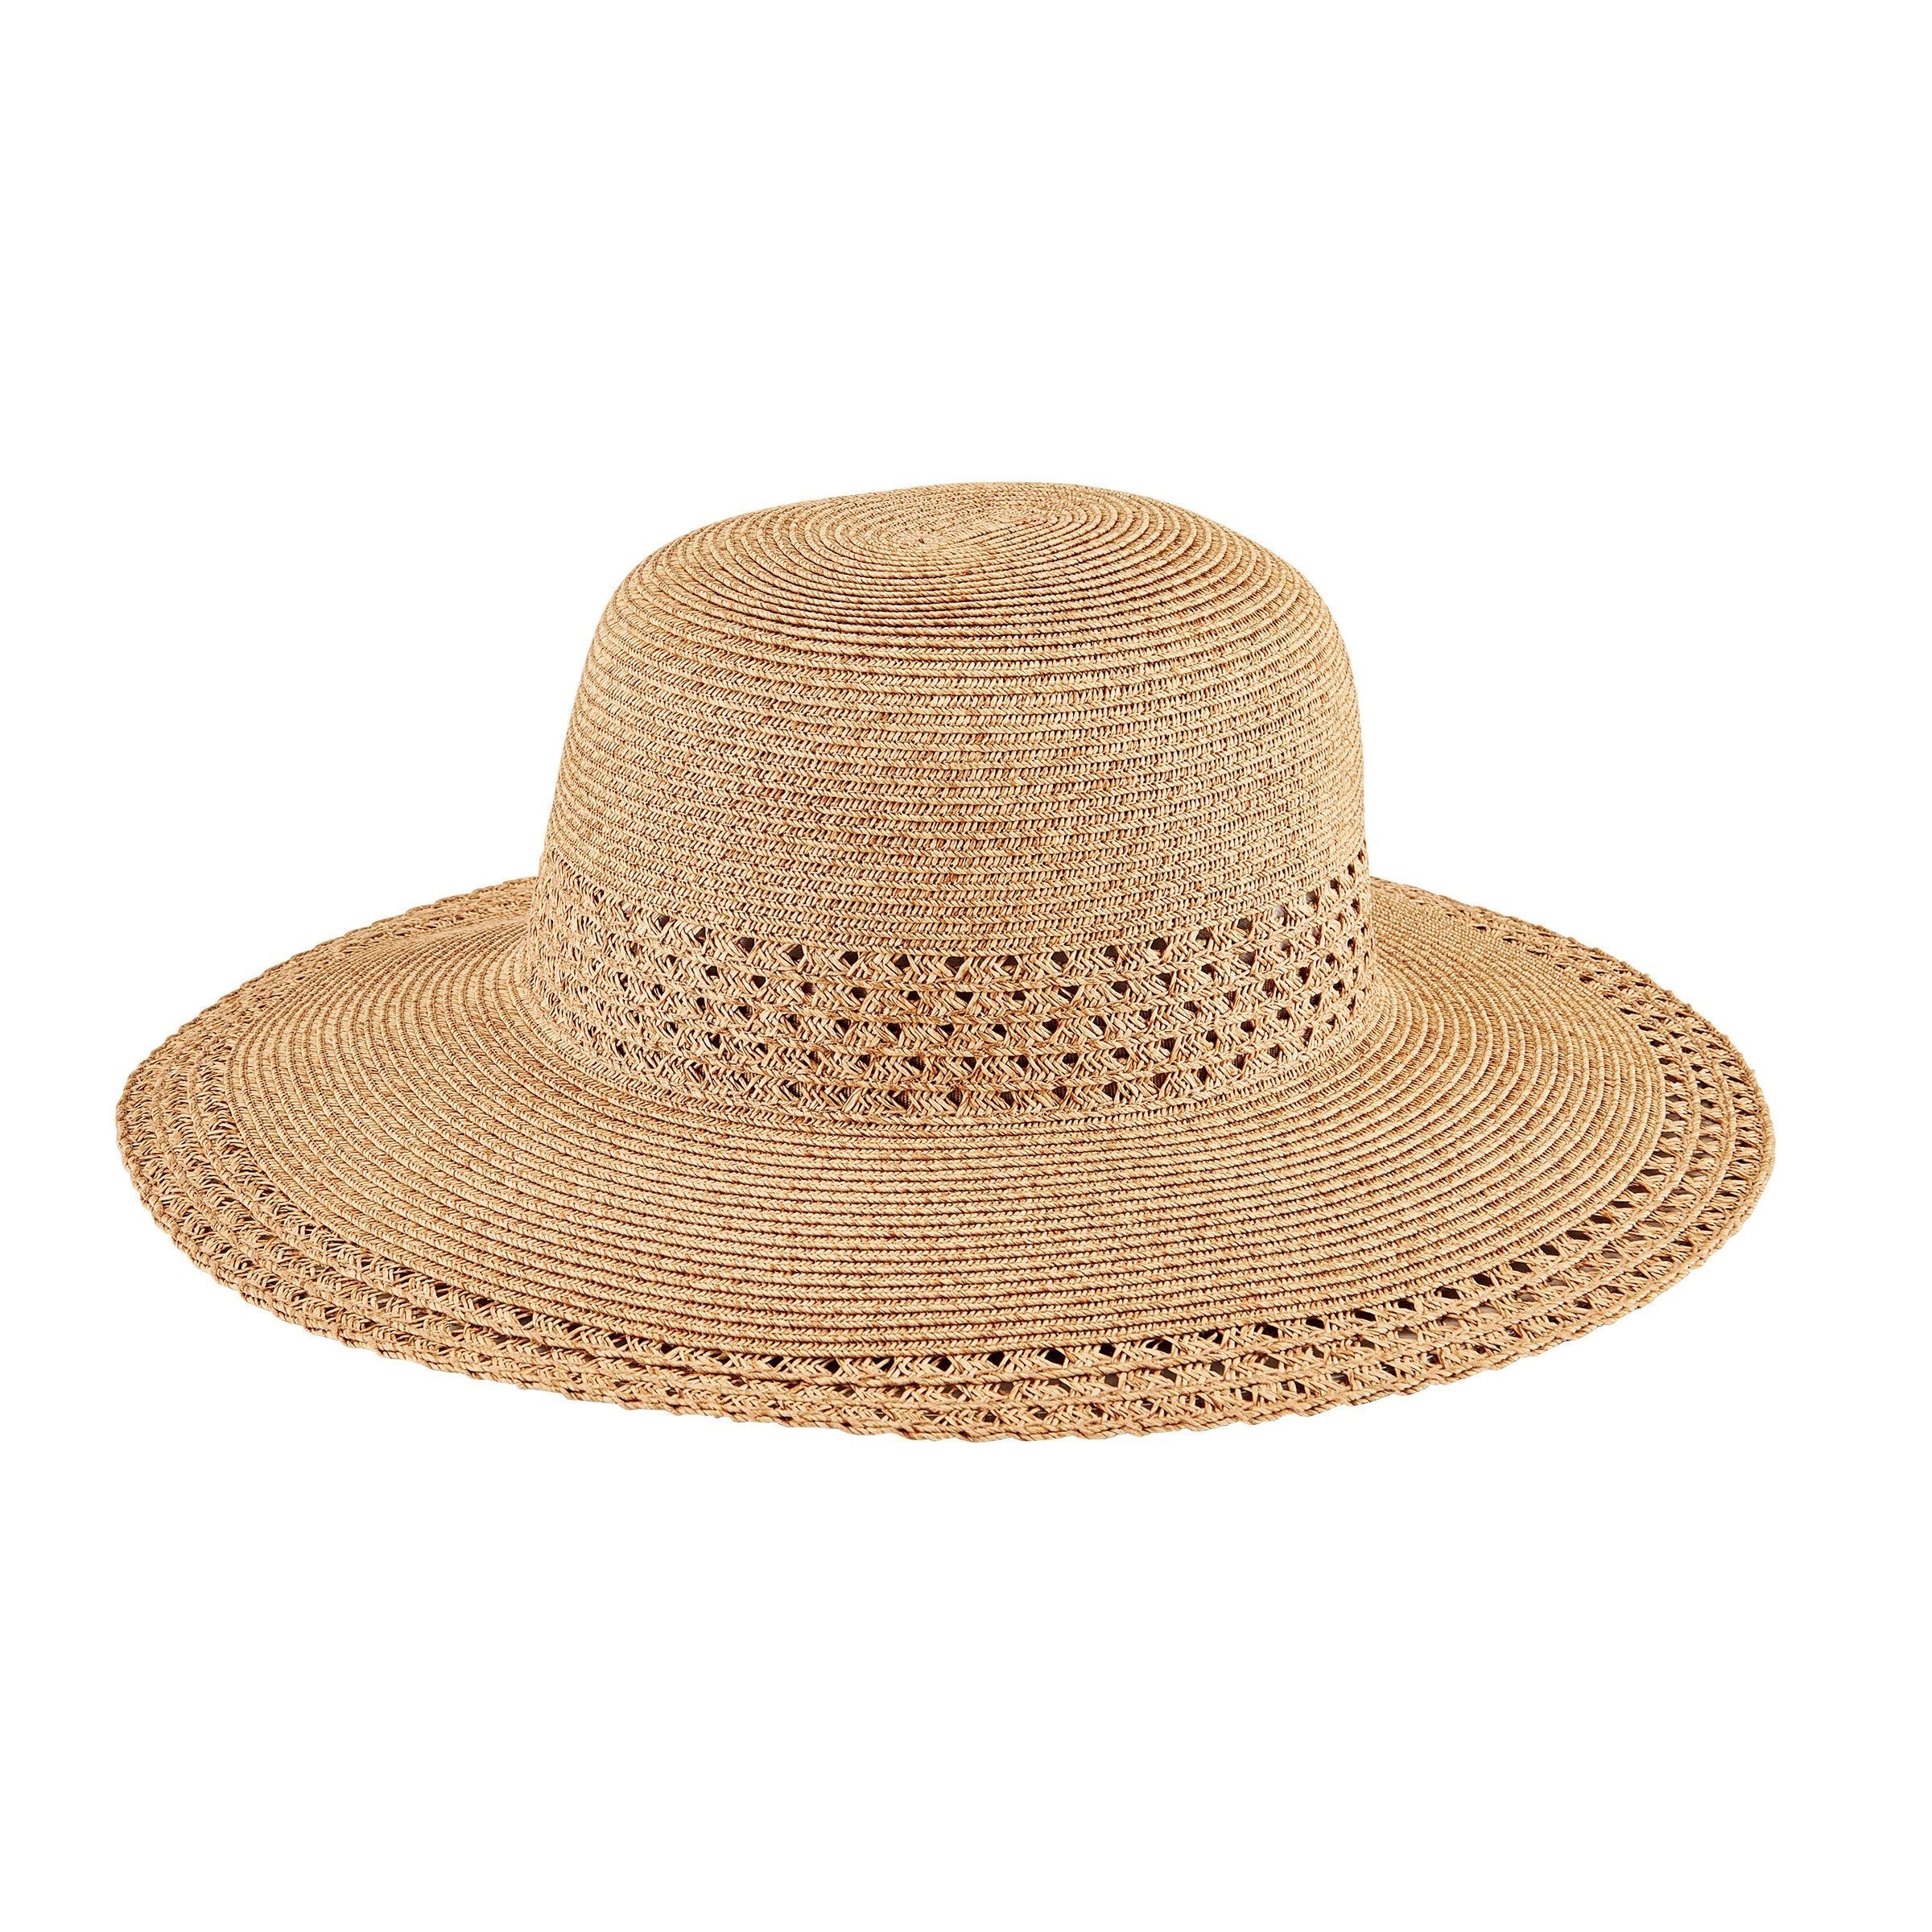 Stylish Wide Brim Round Top Sunhat For Women Lightweight, Hat With